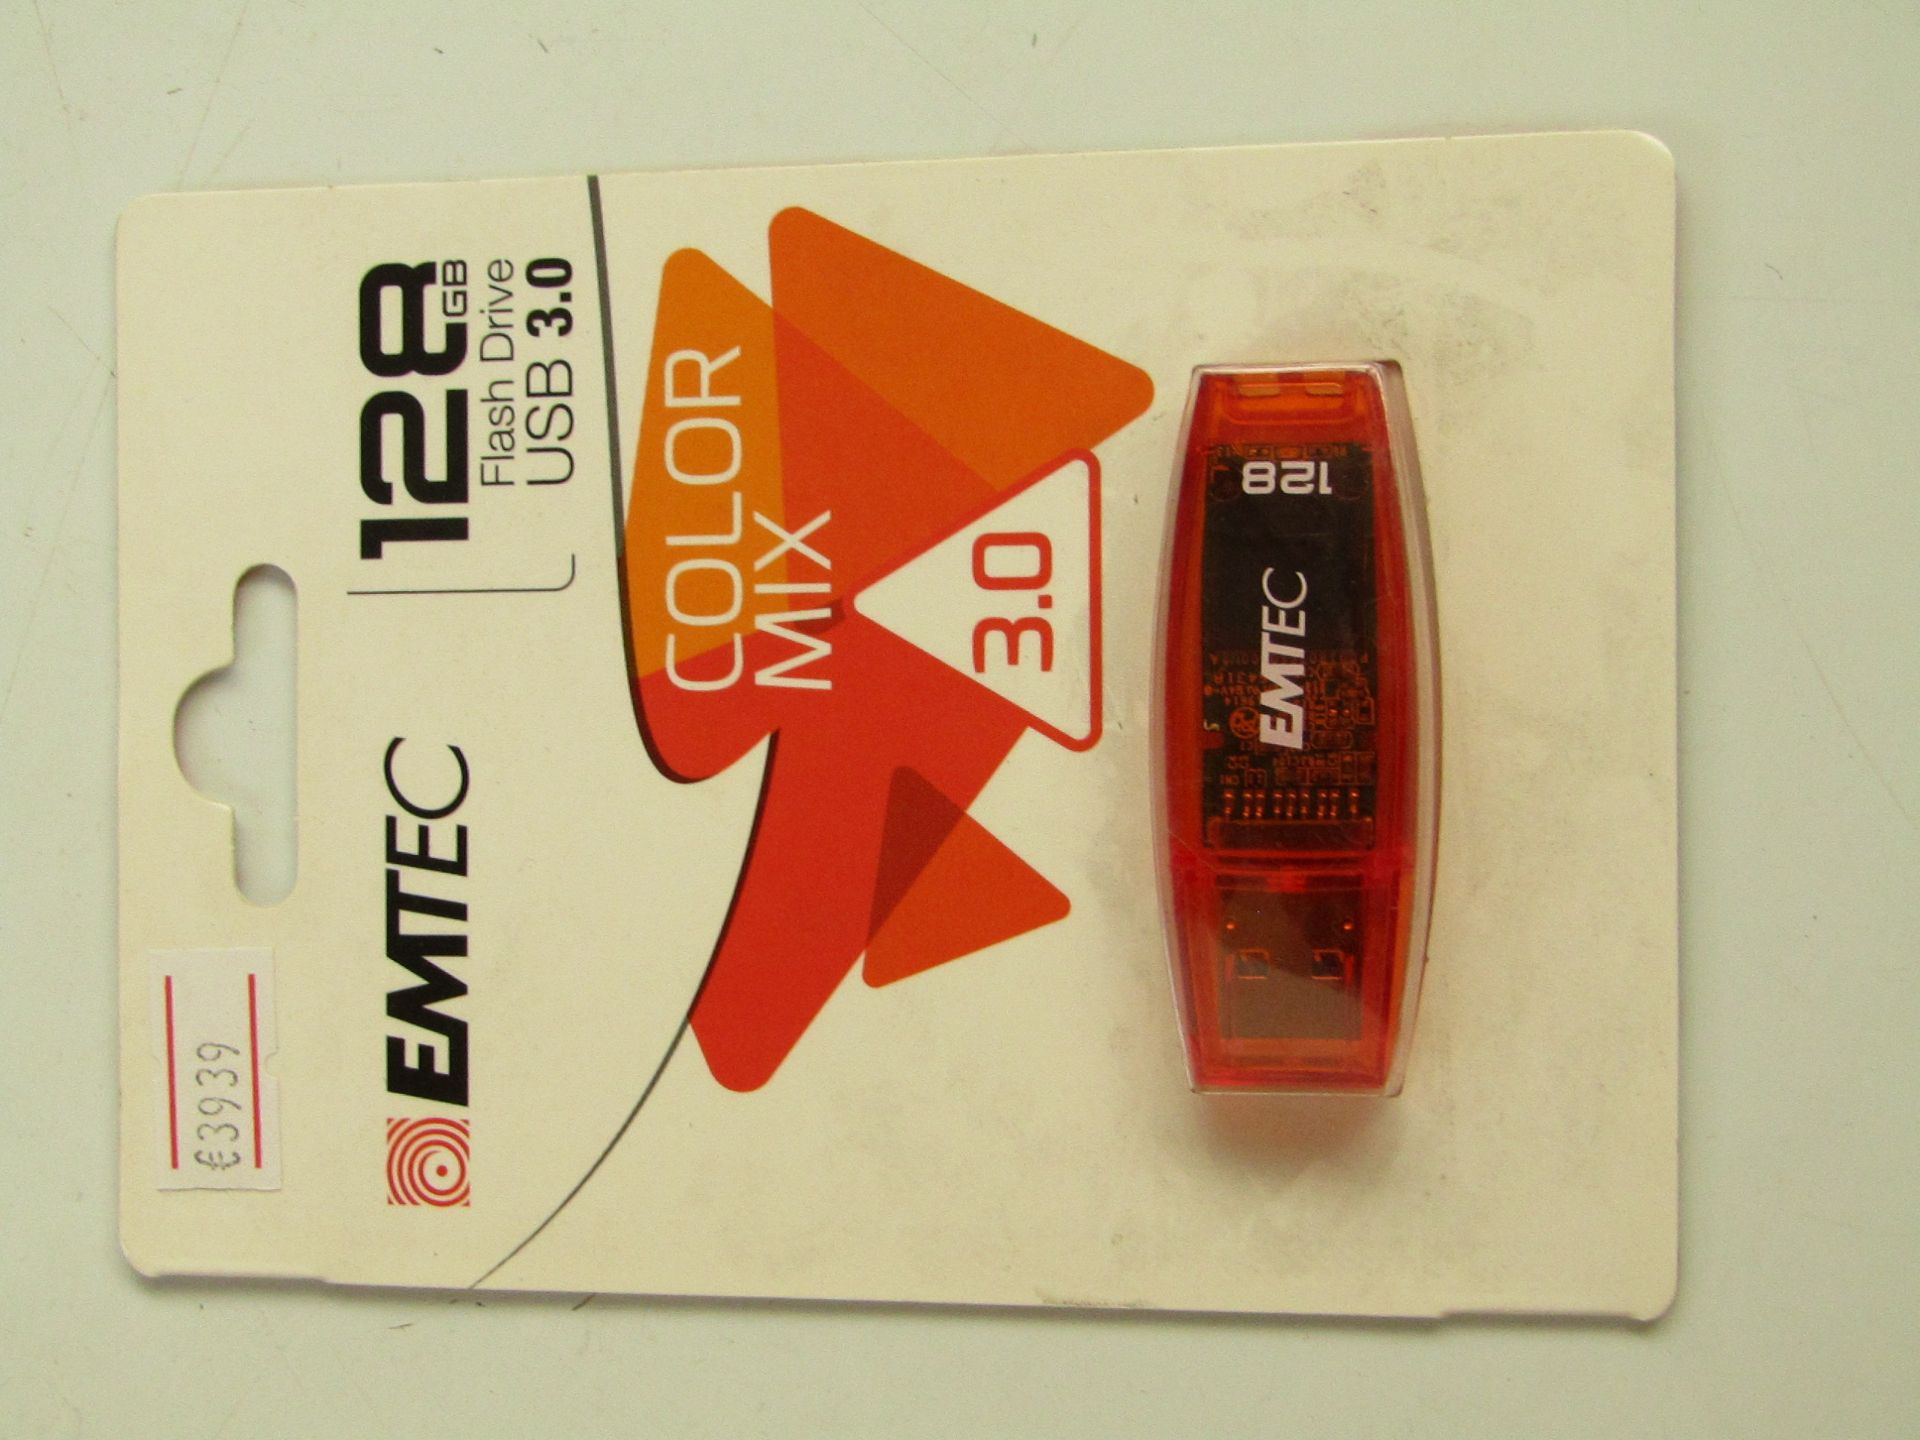 Emtec 128GB USB 3.0 flash drive, new in packaging.